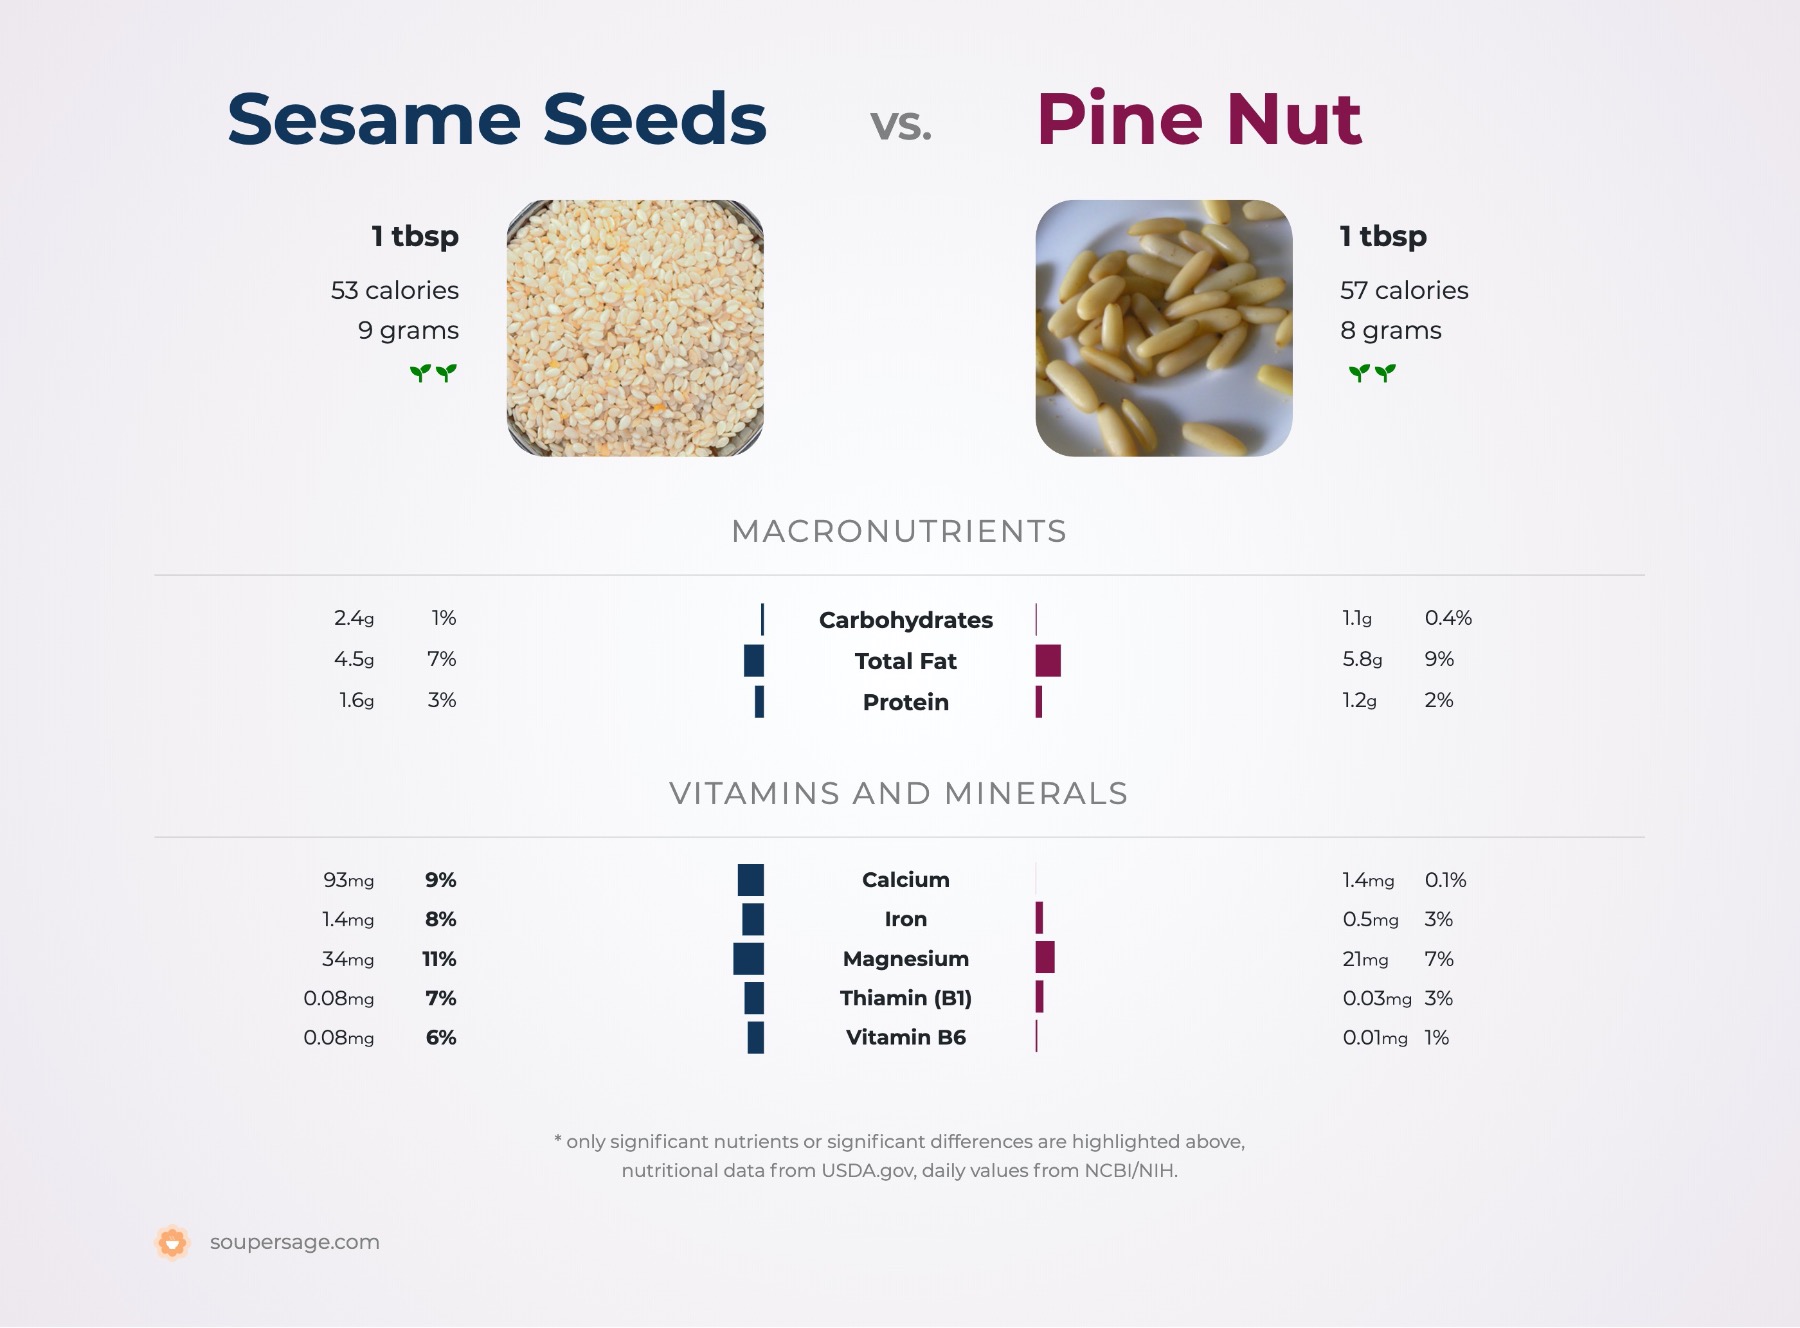 nutrition comparison of pine nut vs. sesame seeds